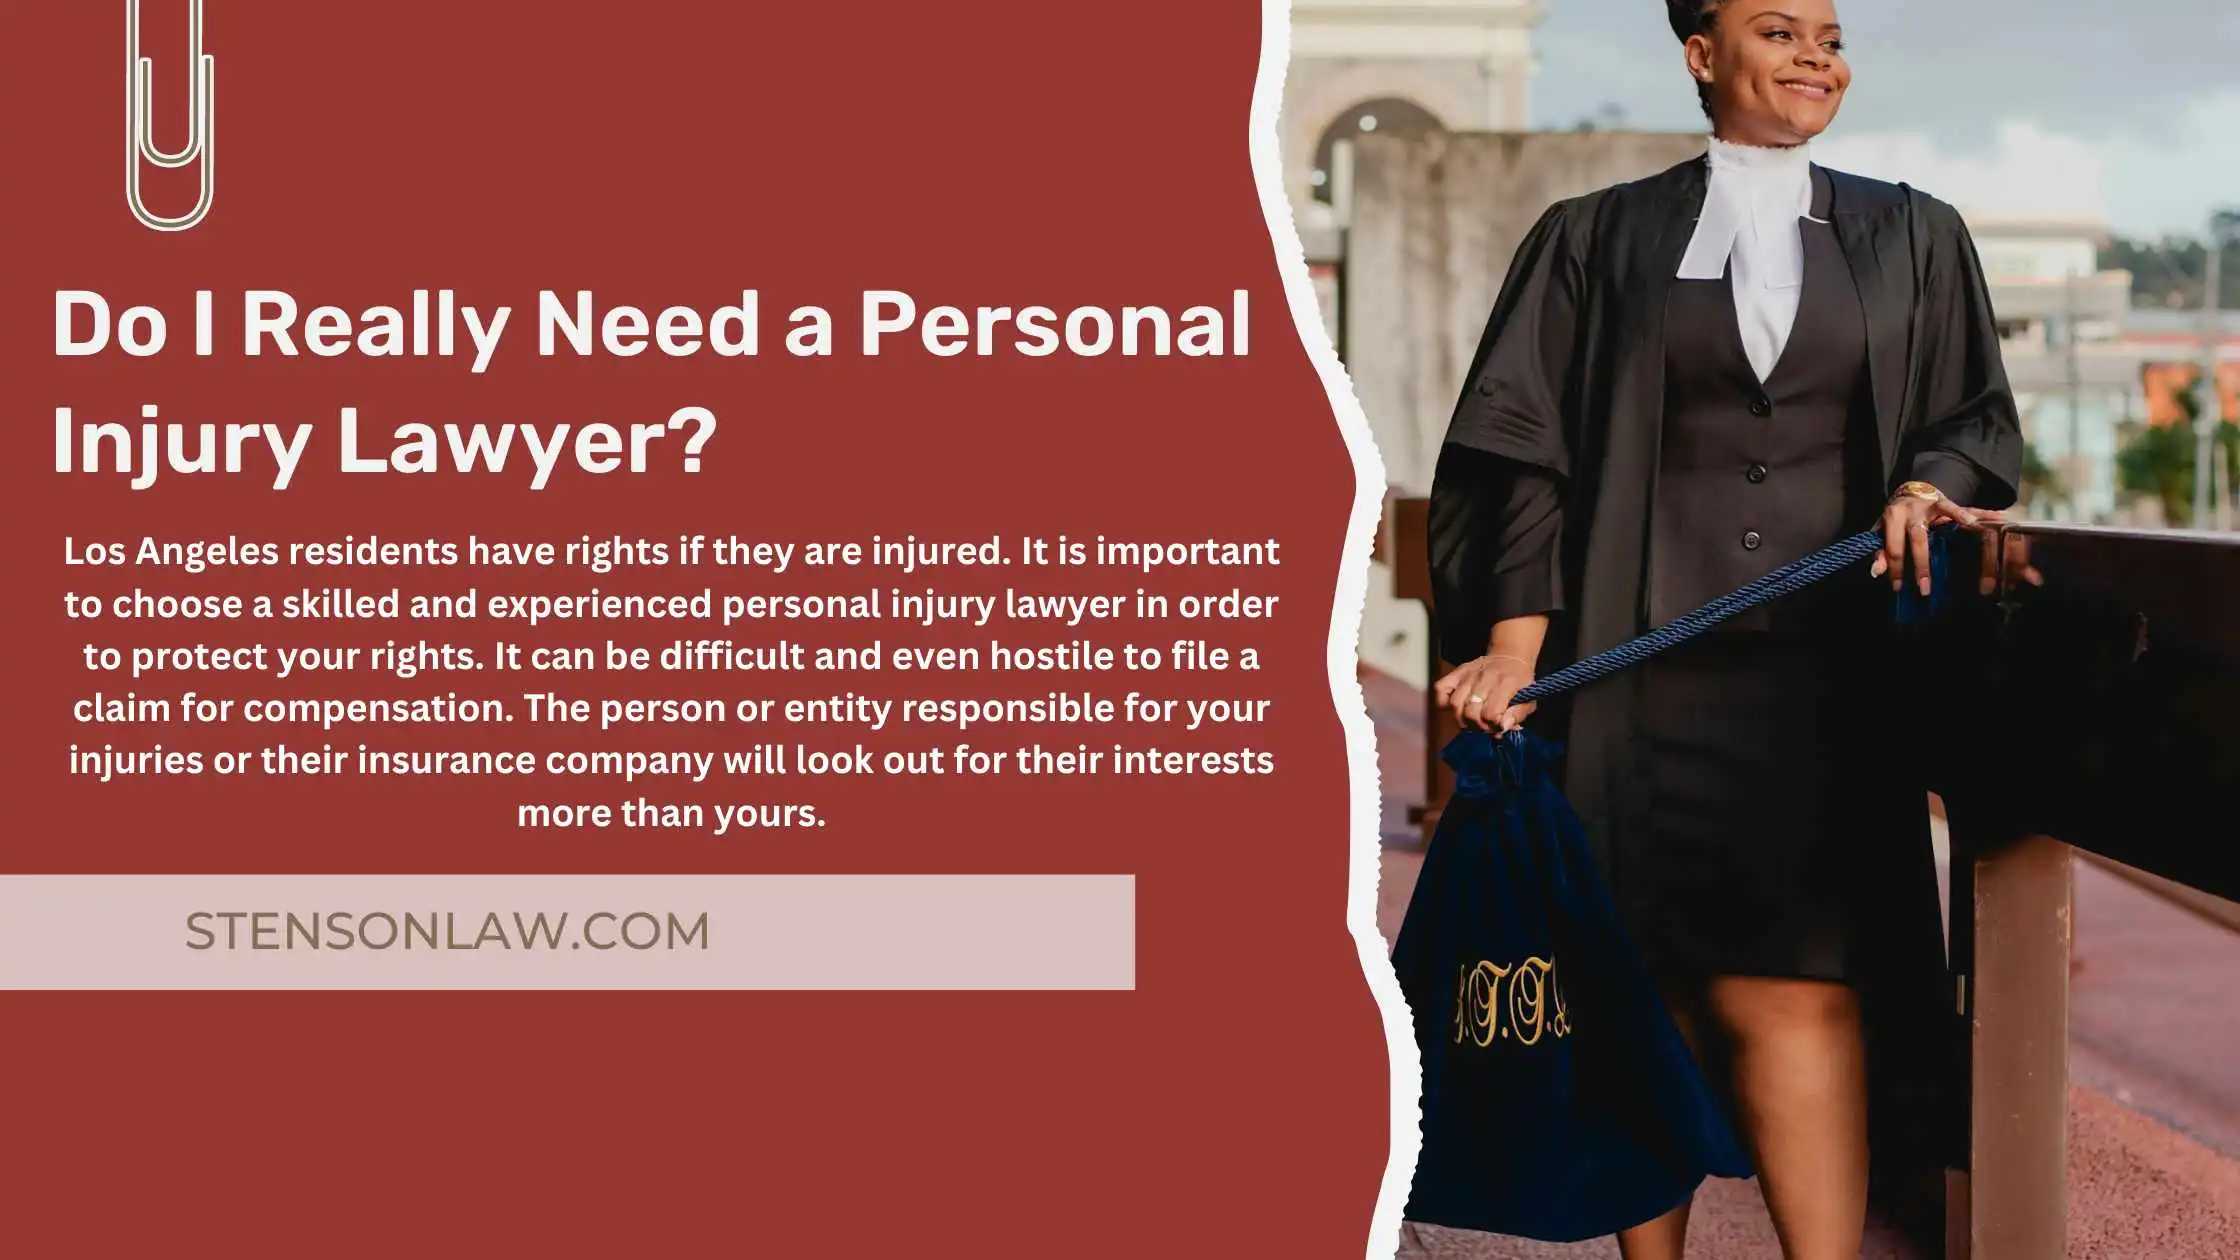 Need a Personal Injury Lawyer